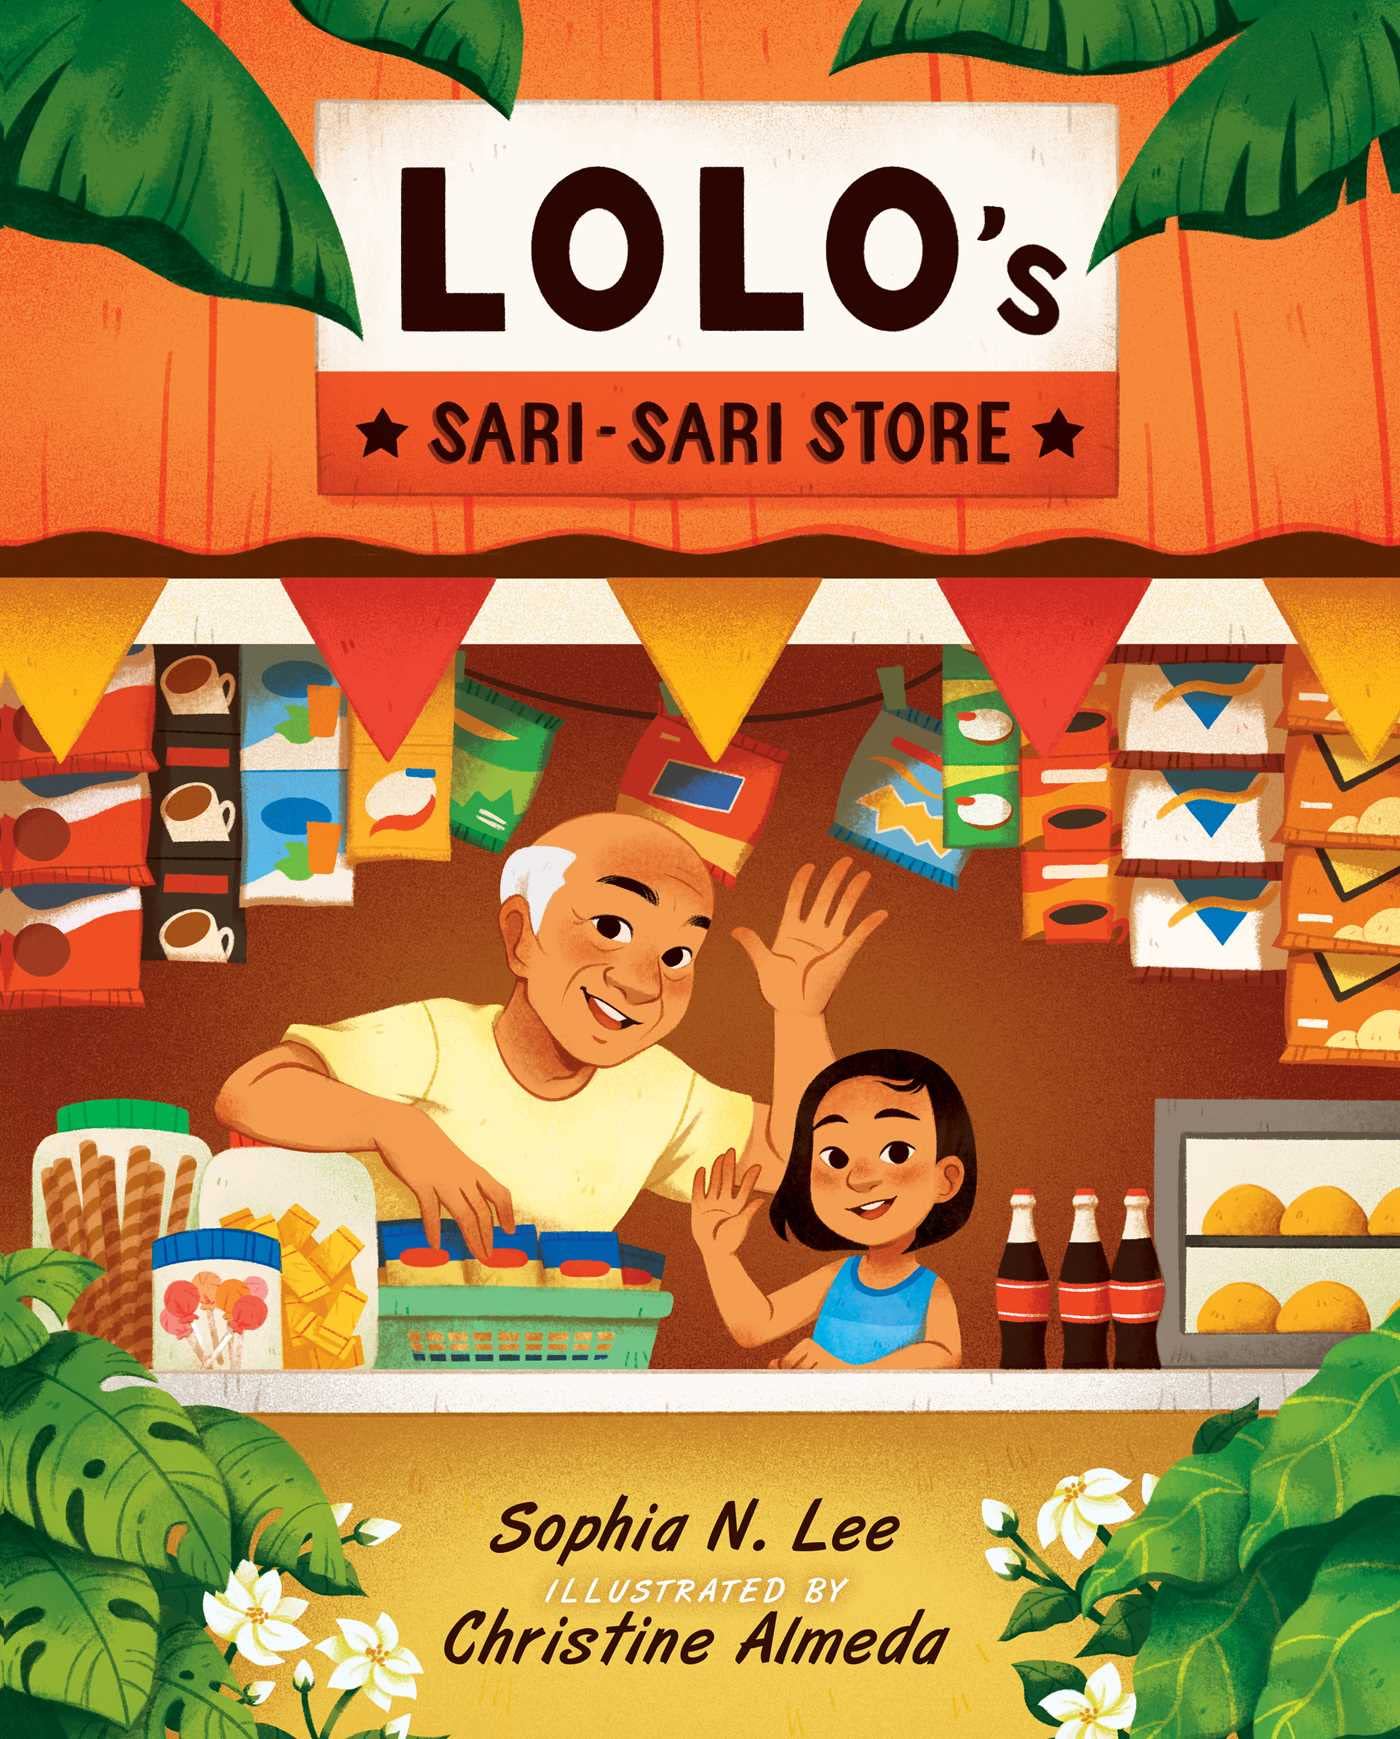 Lolo’s Sari-sari Store